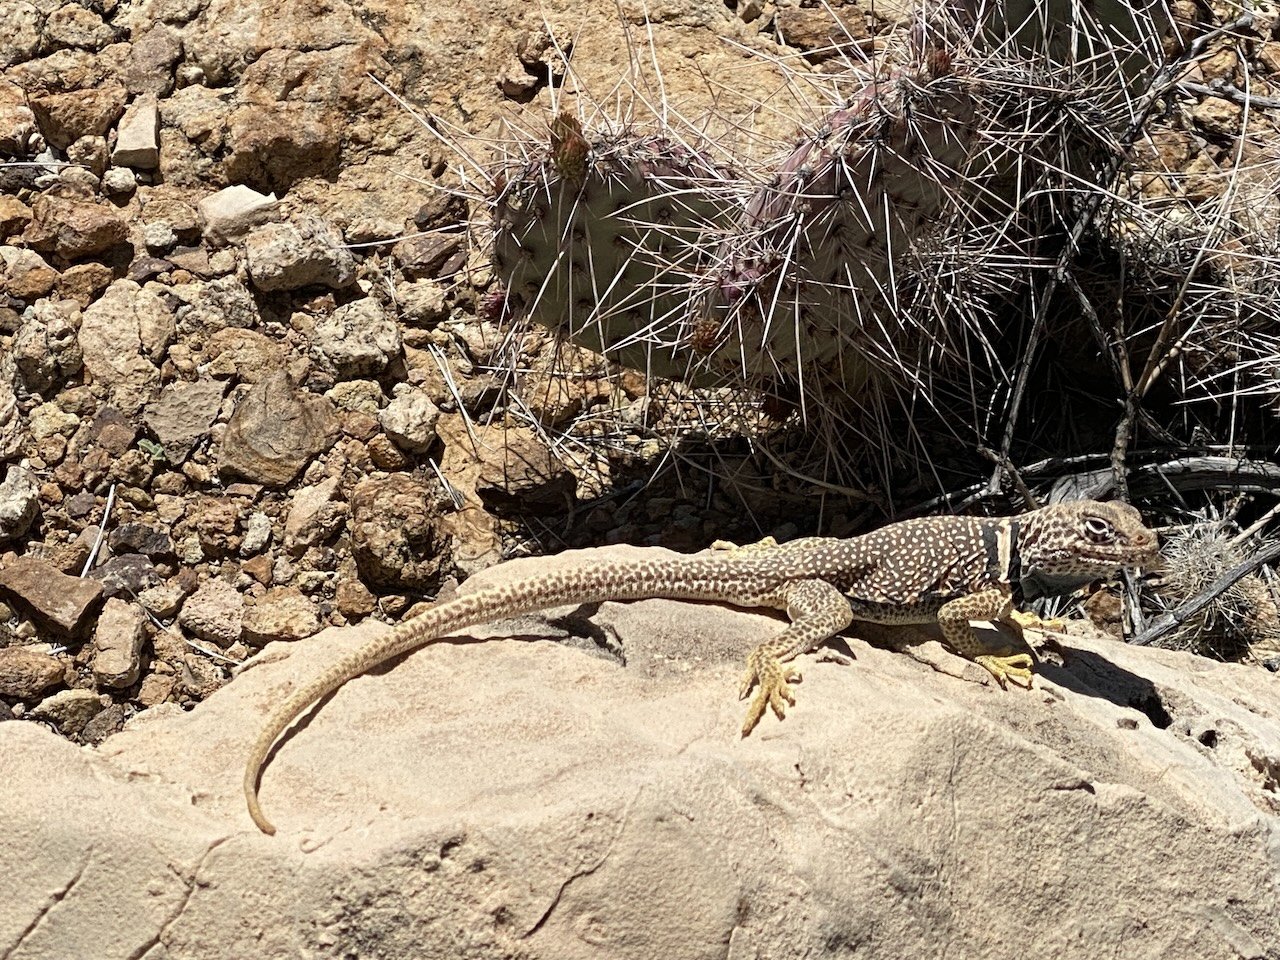 collared lizard sunbathing